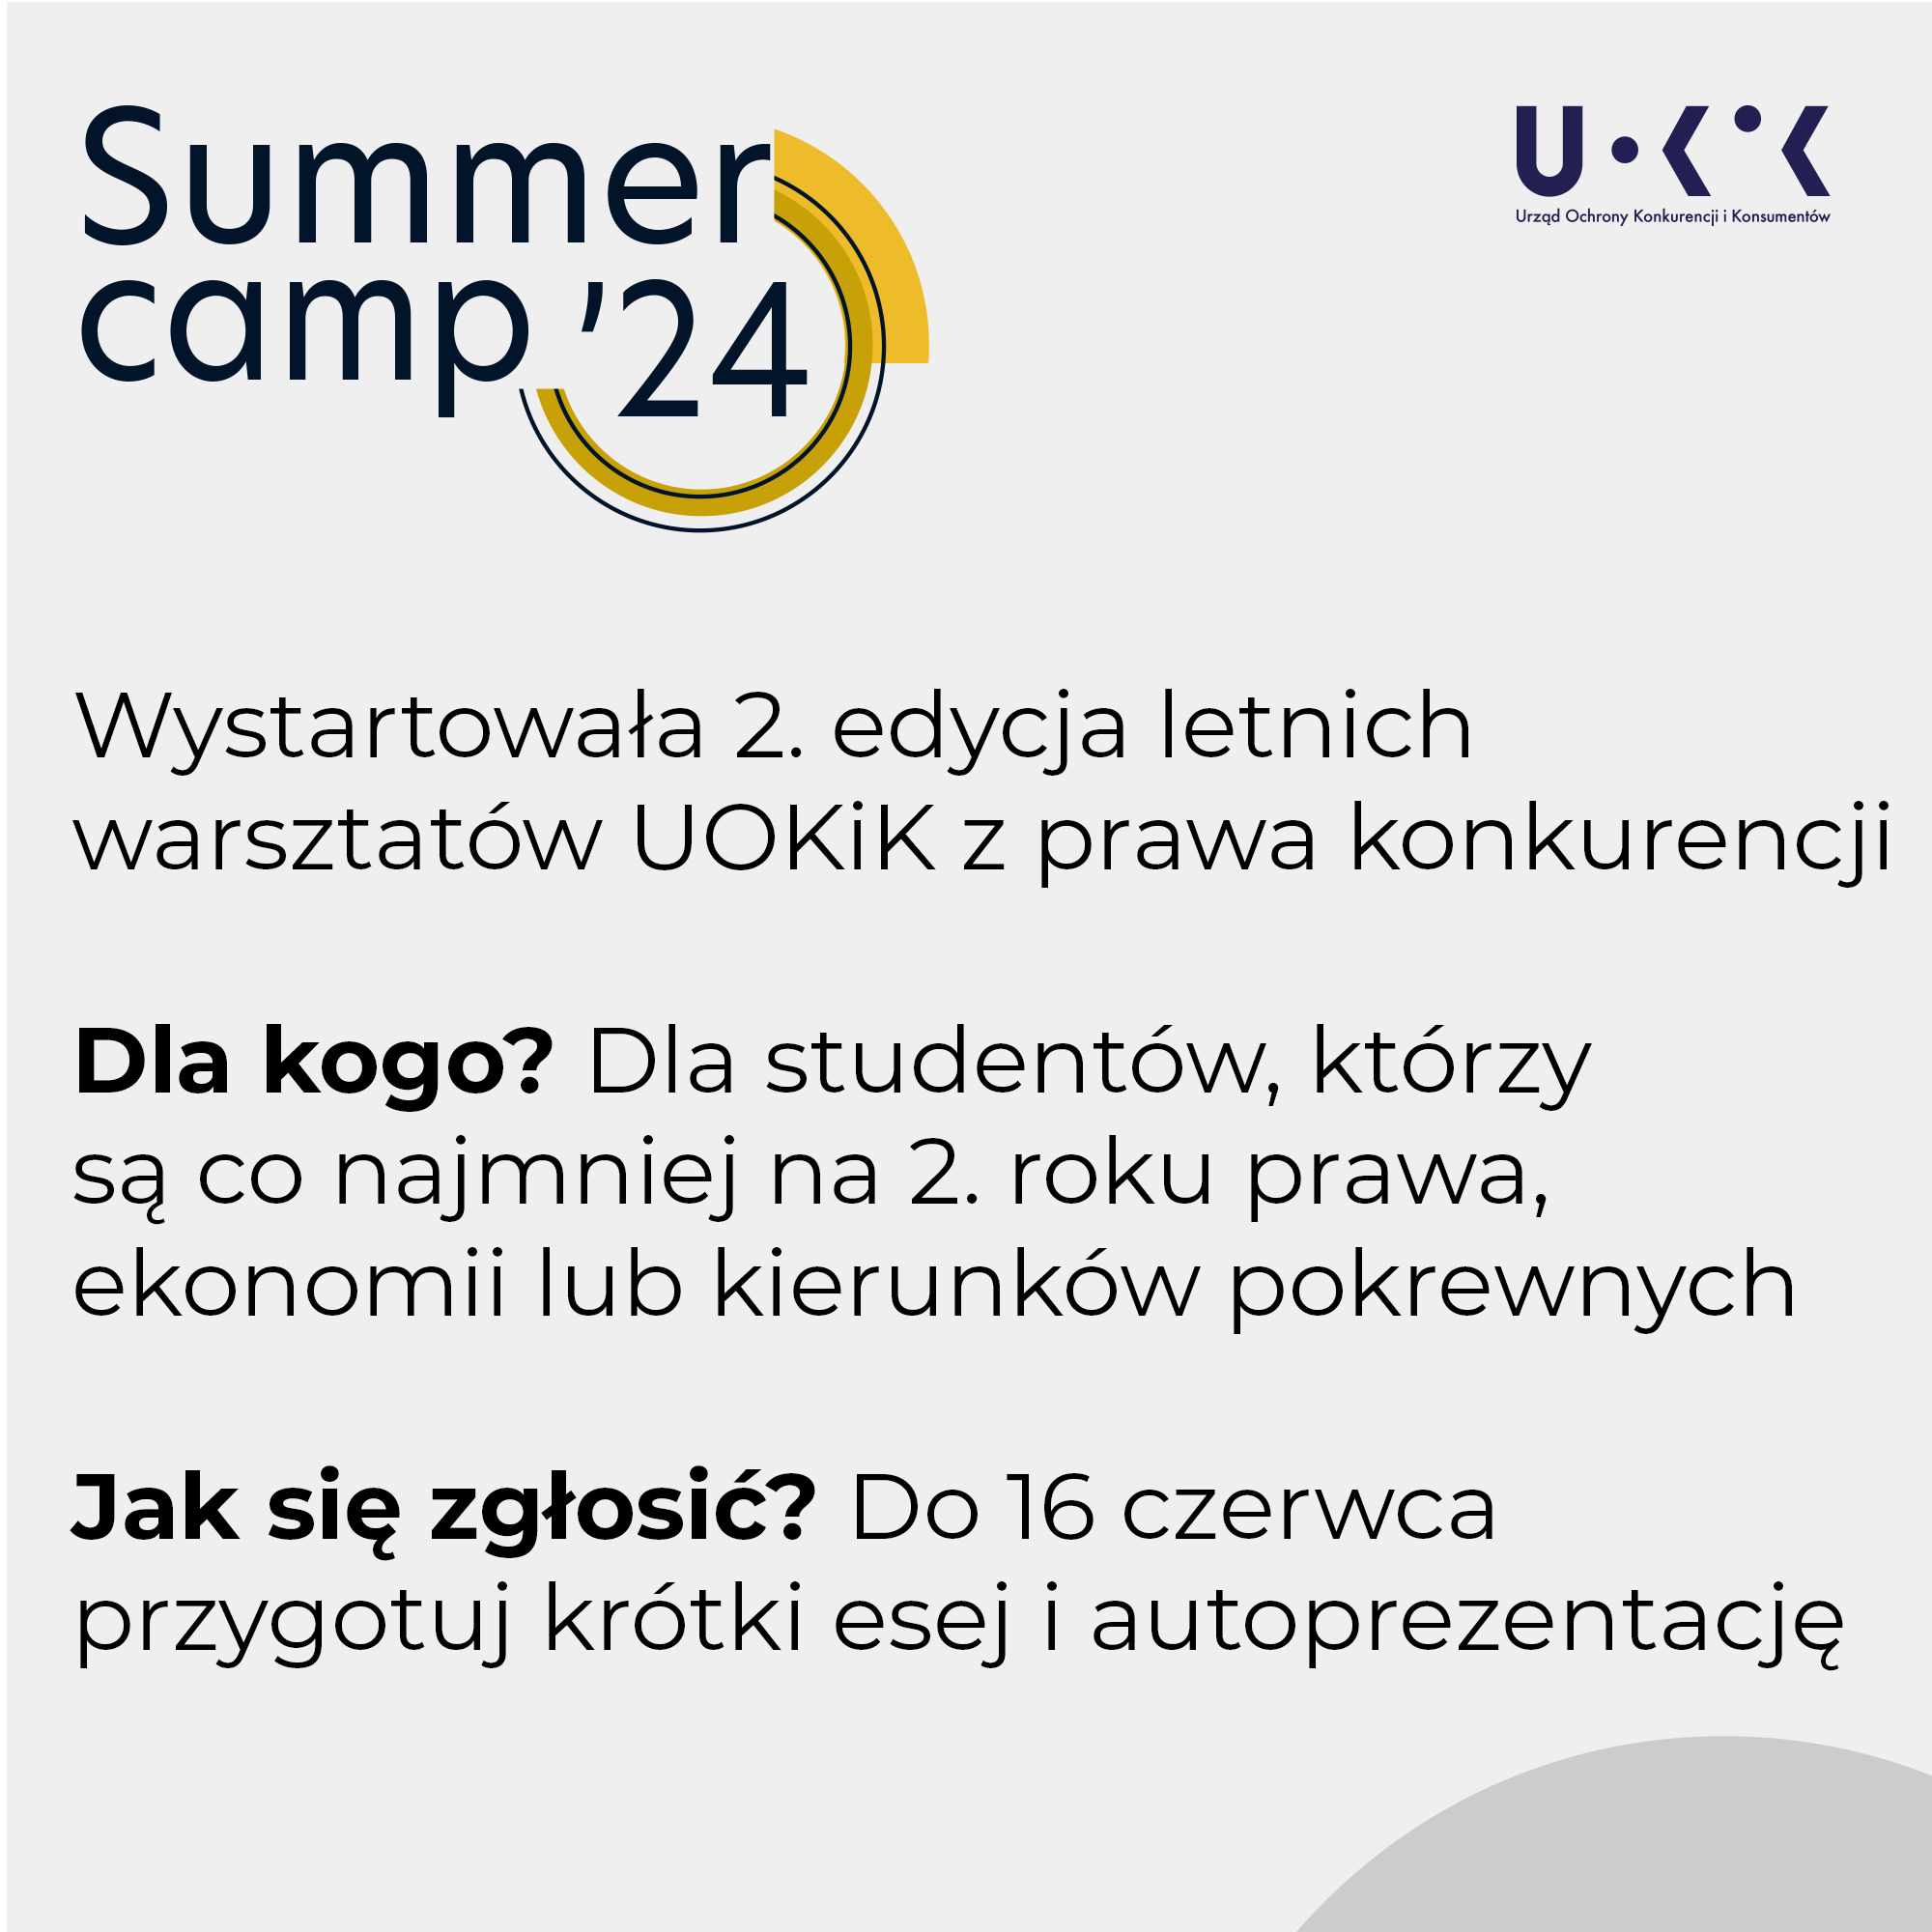 Summer Camp UOKiK 24